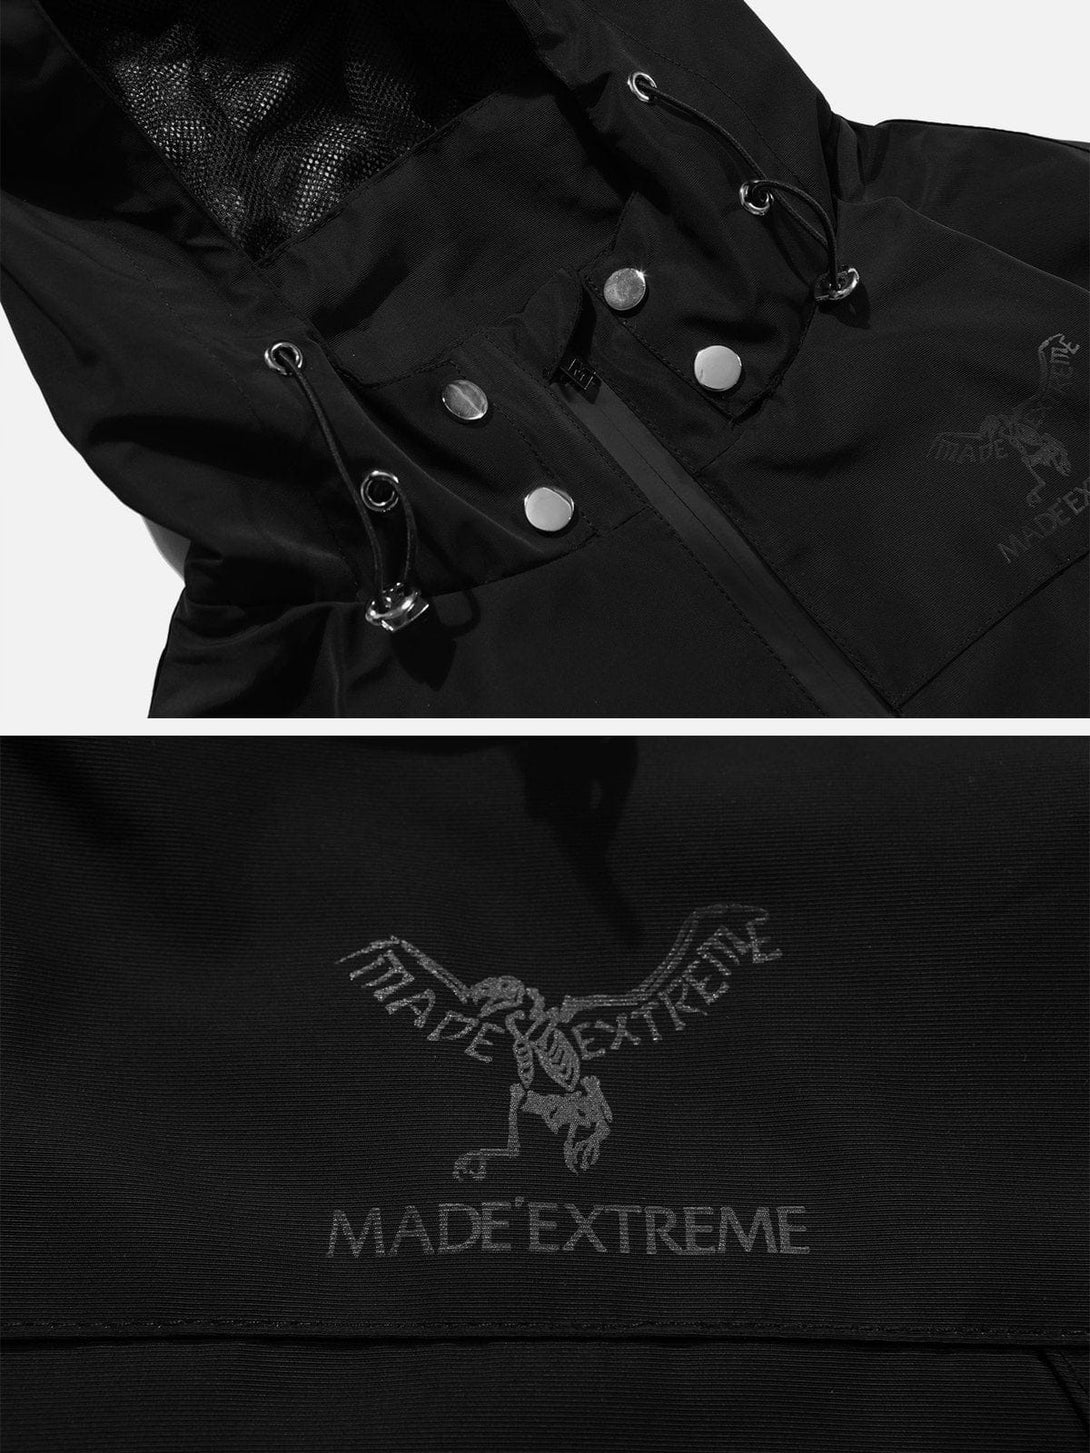 Majesda® - Solid Color Drawstring Jacket outfit ideas, streetwear fashion - majesda.com